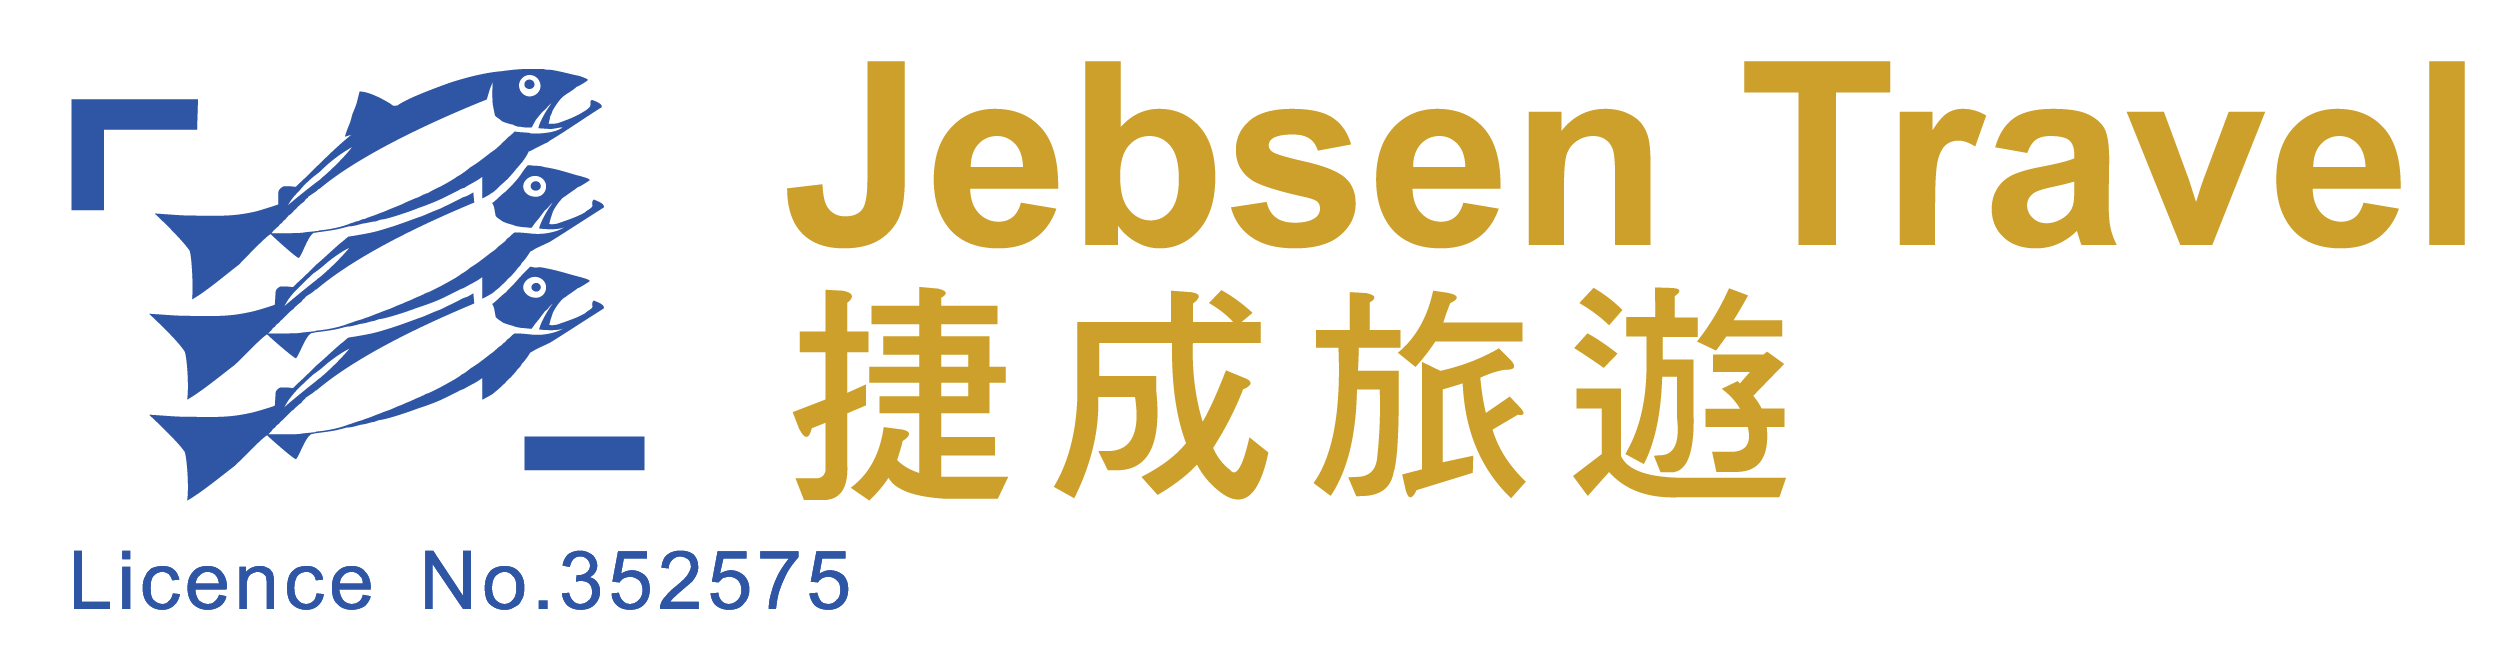 jebsen travel logo